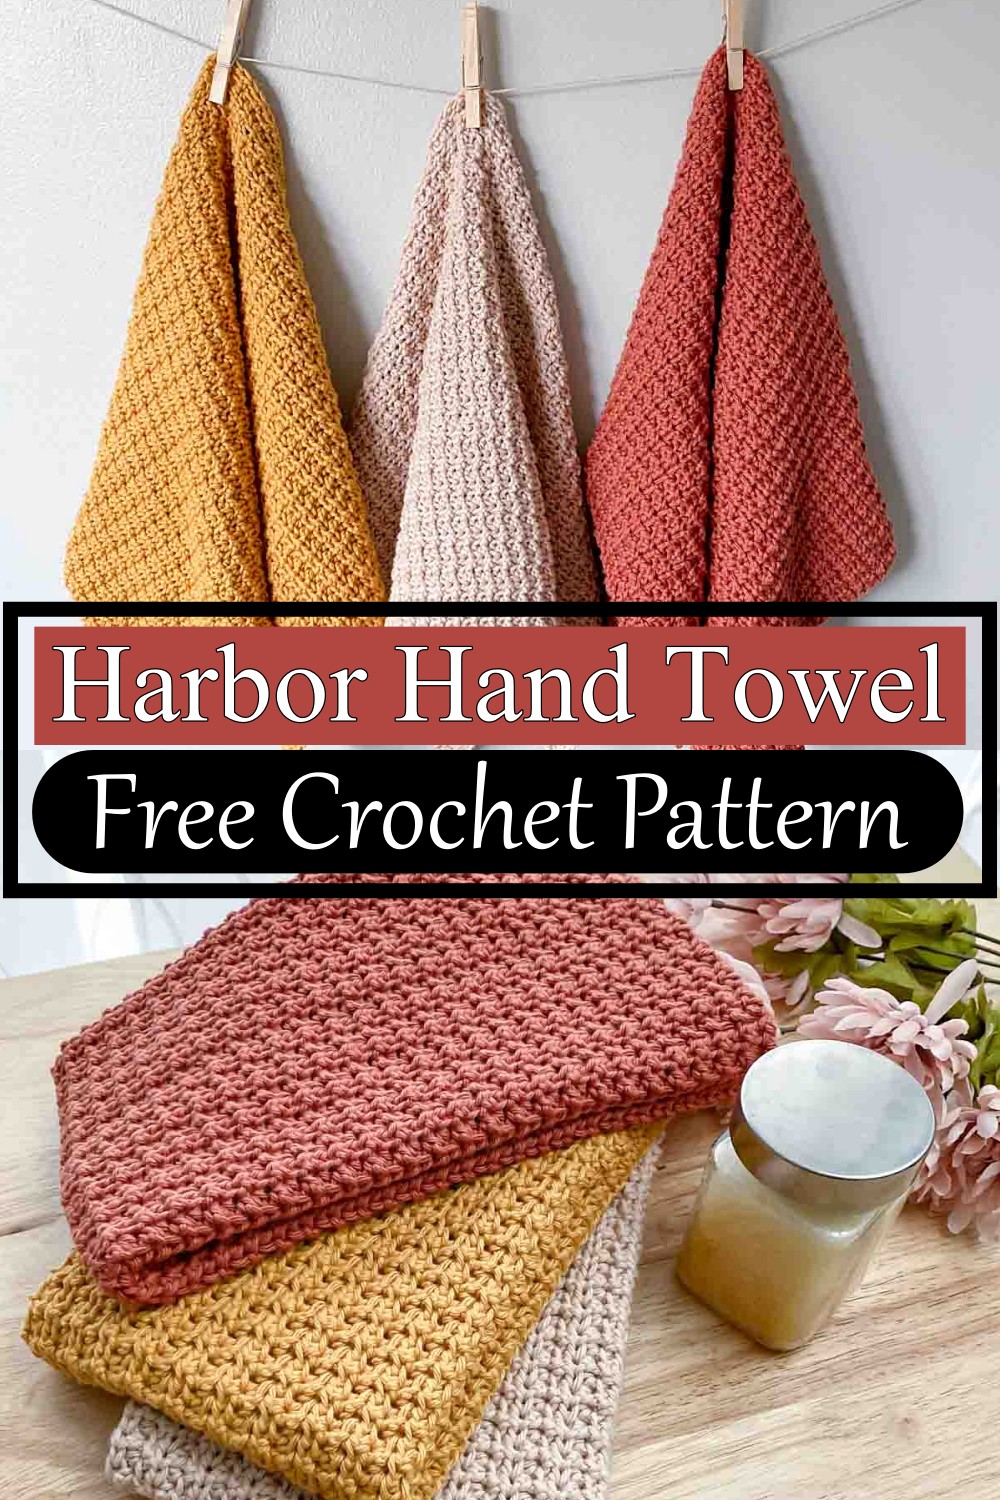 Harbor Hand Towel